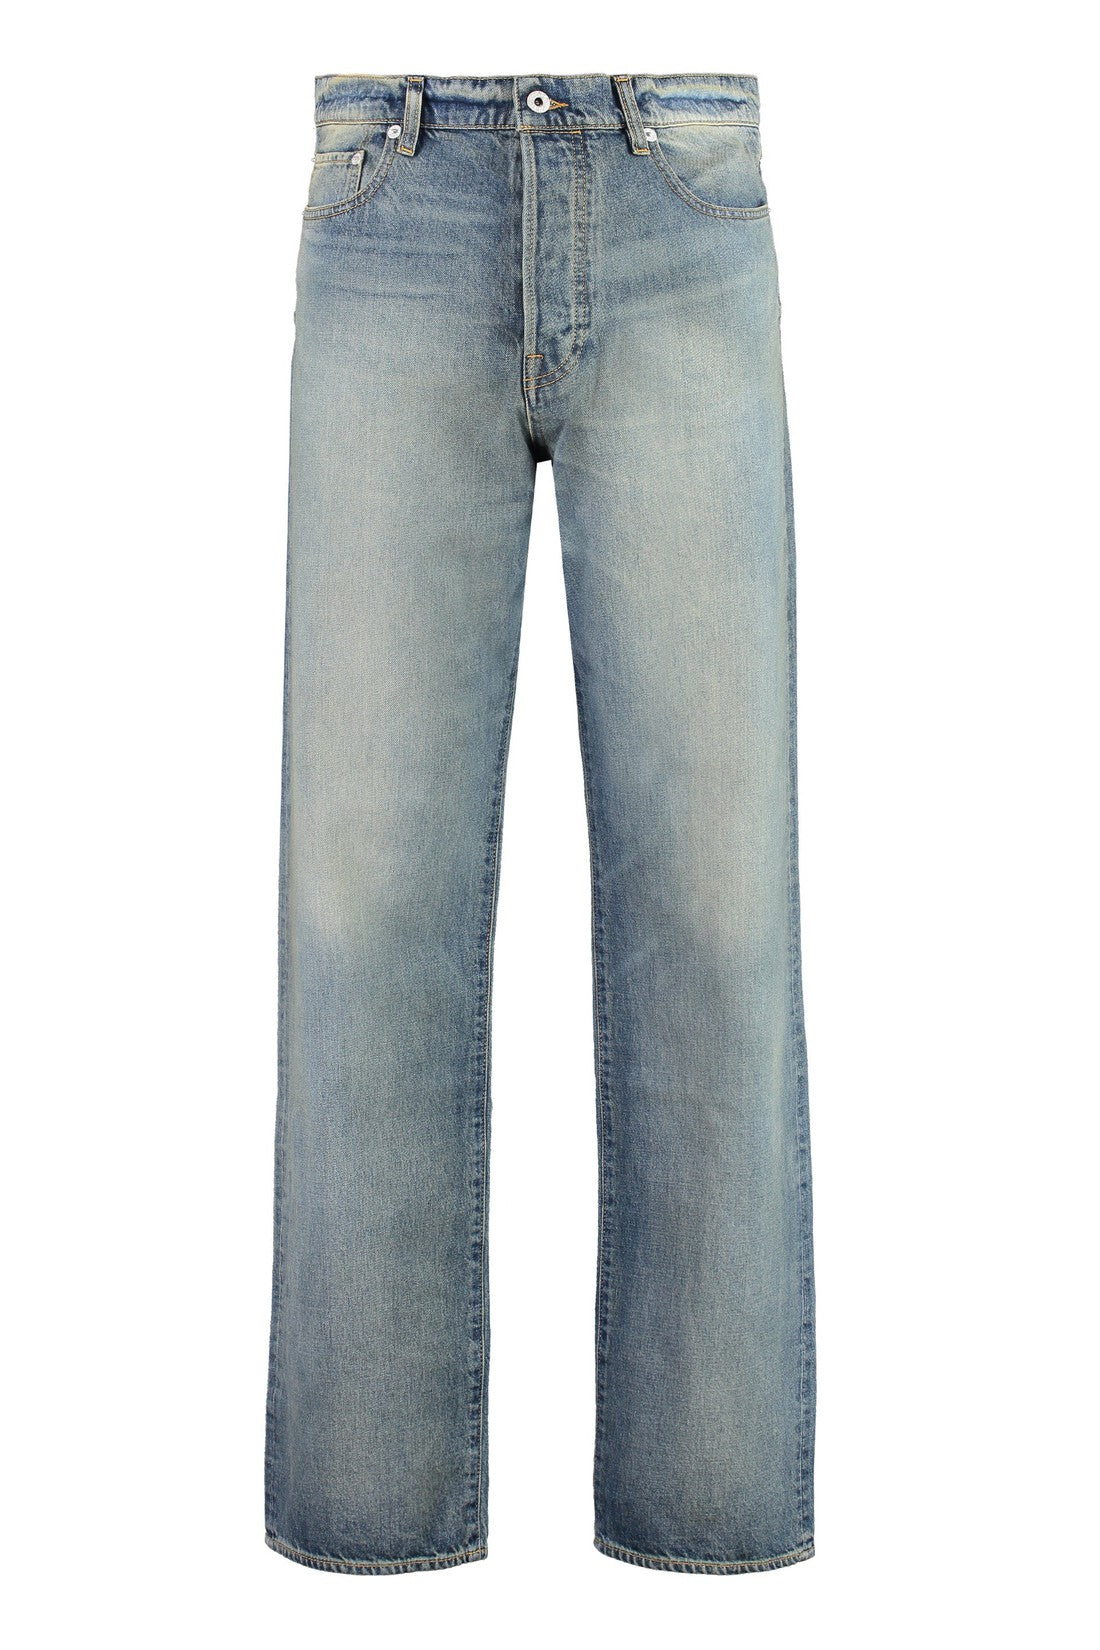 Kenzo-OUTLET-SALE-Asagao 5-pocket straight-leg jeans-ARCHIVIST